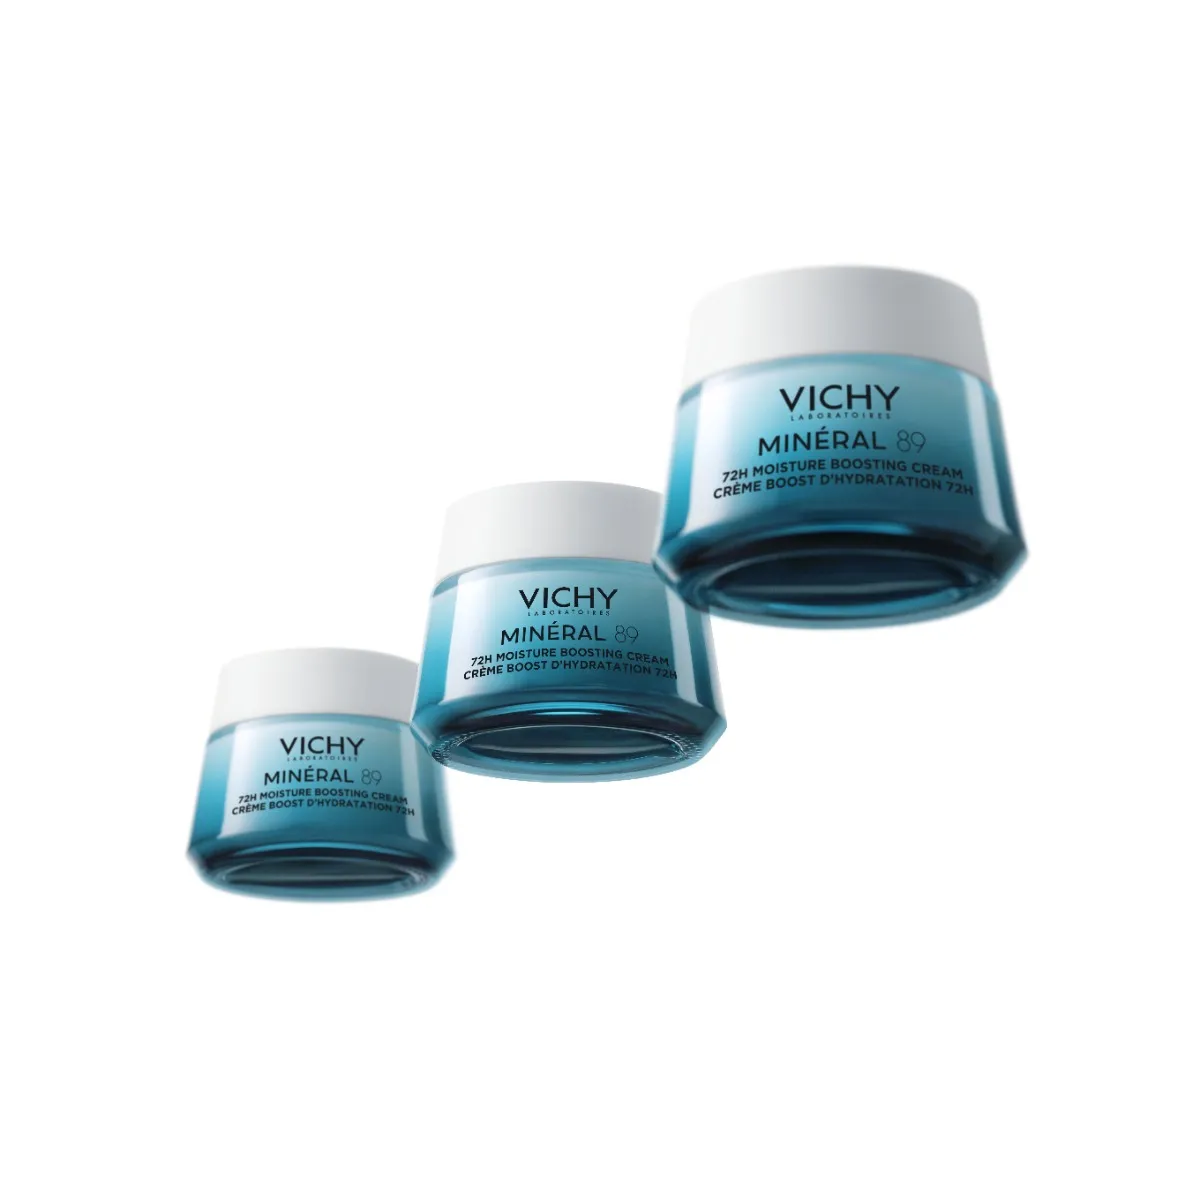 Vichy Minéral 89 72H Hydratační krém 50 ml